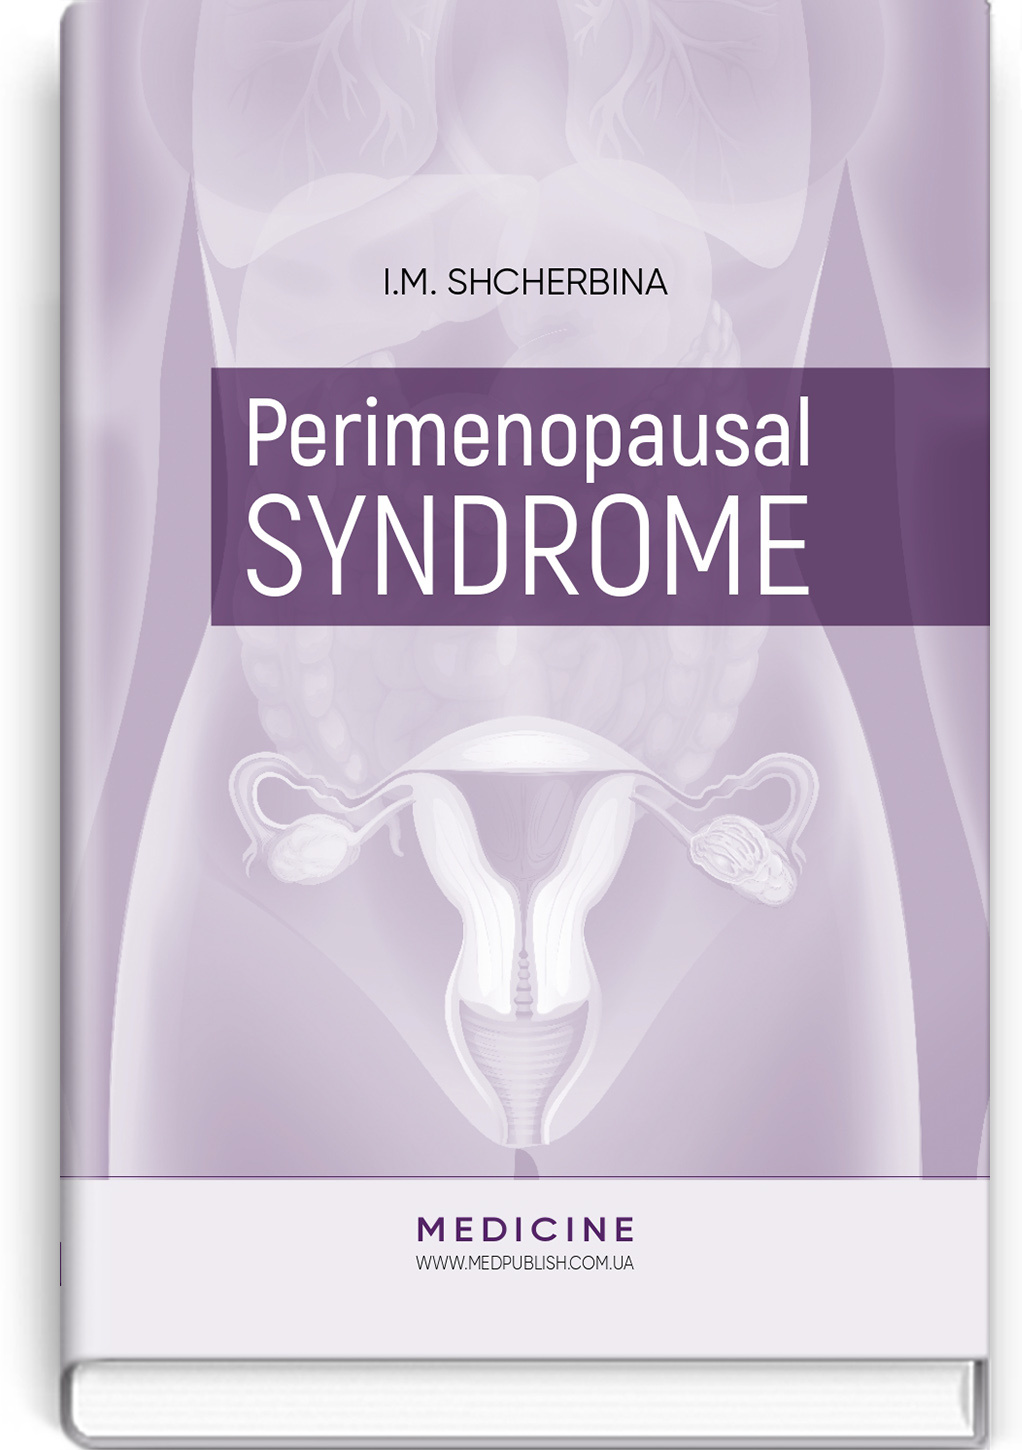 Perimenopausal syndrome: monograph